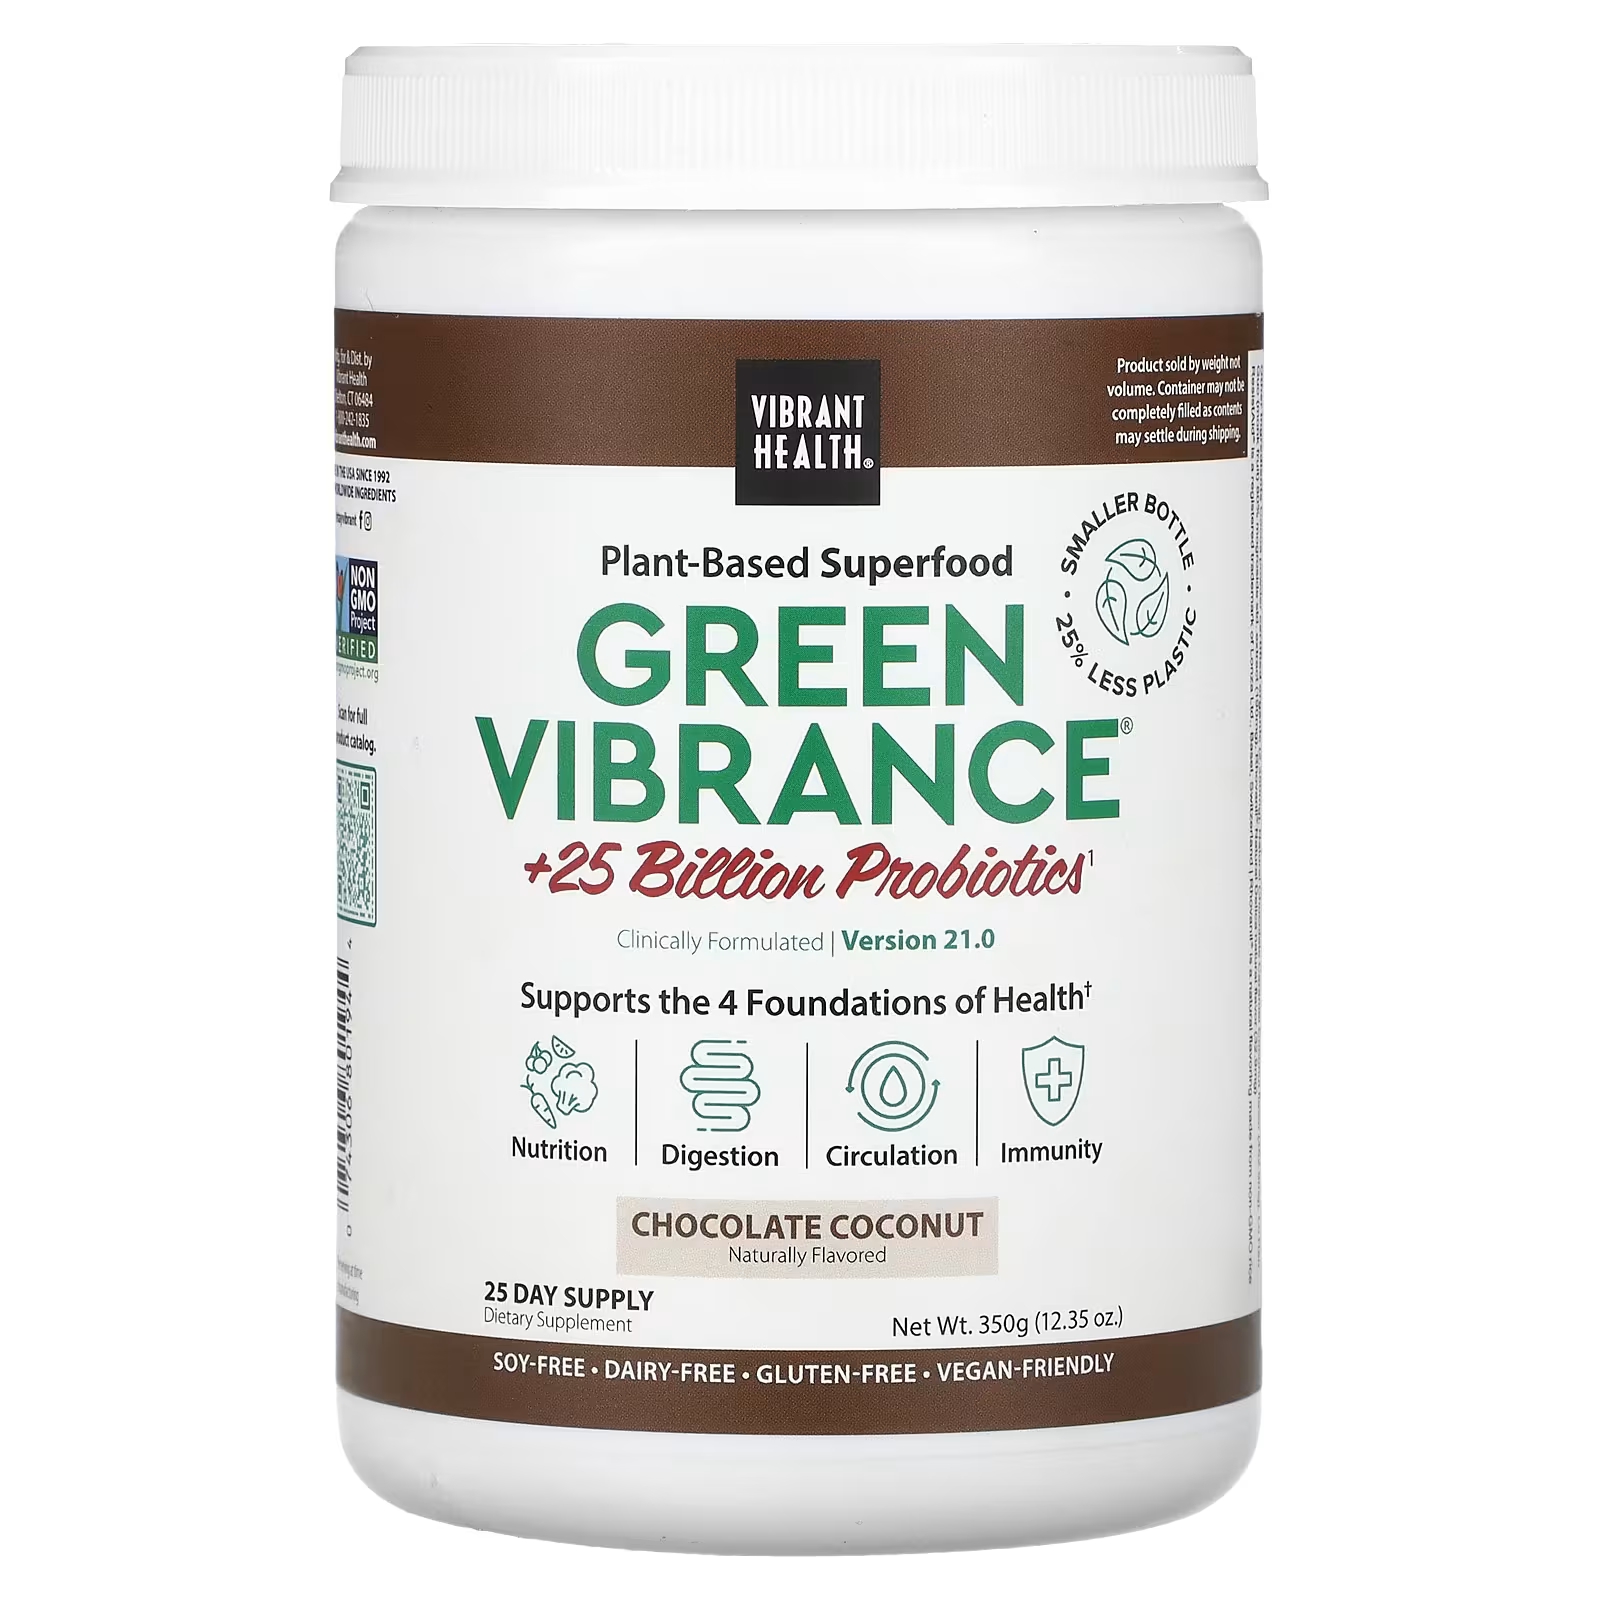 Vibrant Health Green Vibrance +25 миллиардов пробиотиков Версия 21.0 Шоколад Кокос 12,35 унции (350 г) vibrant health green vibrance 25 млрд пробиотиков версия 19 1 168 г 5 96 унции